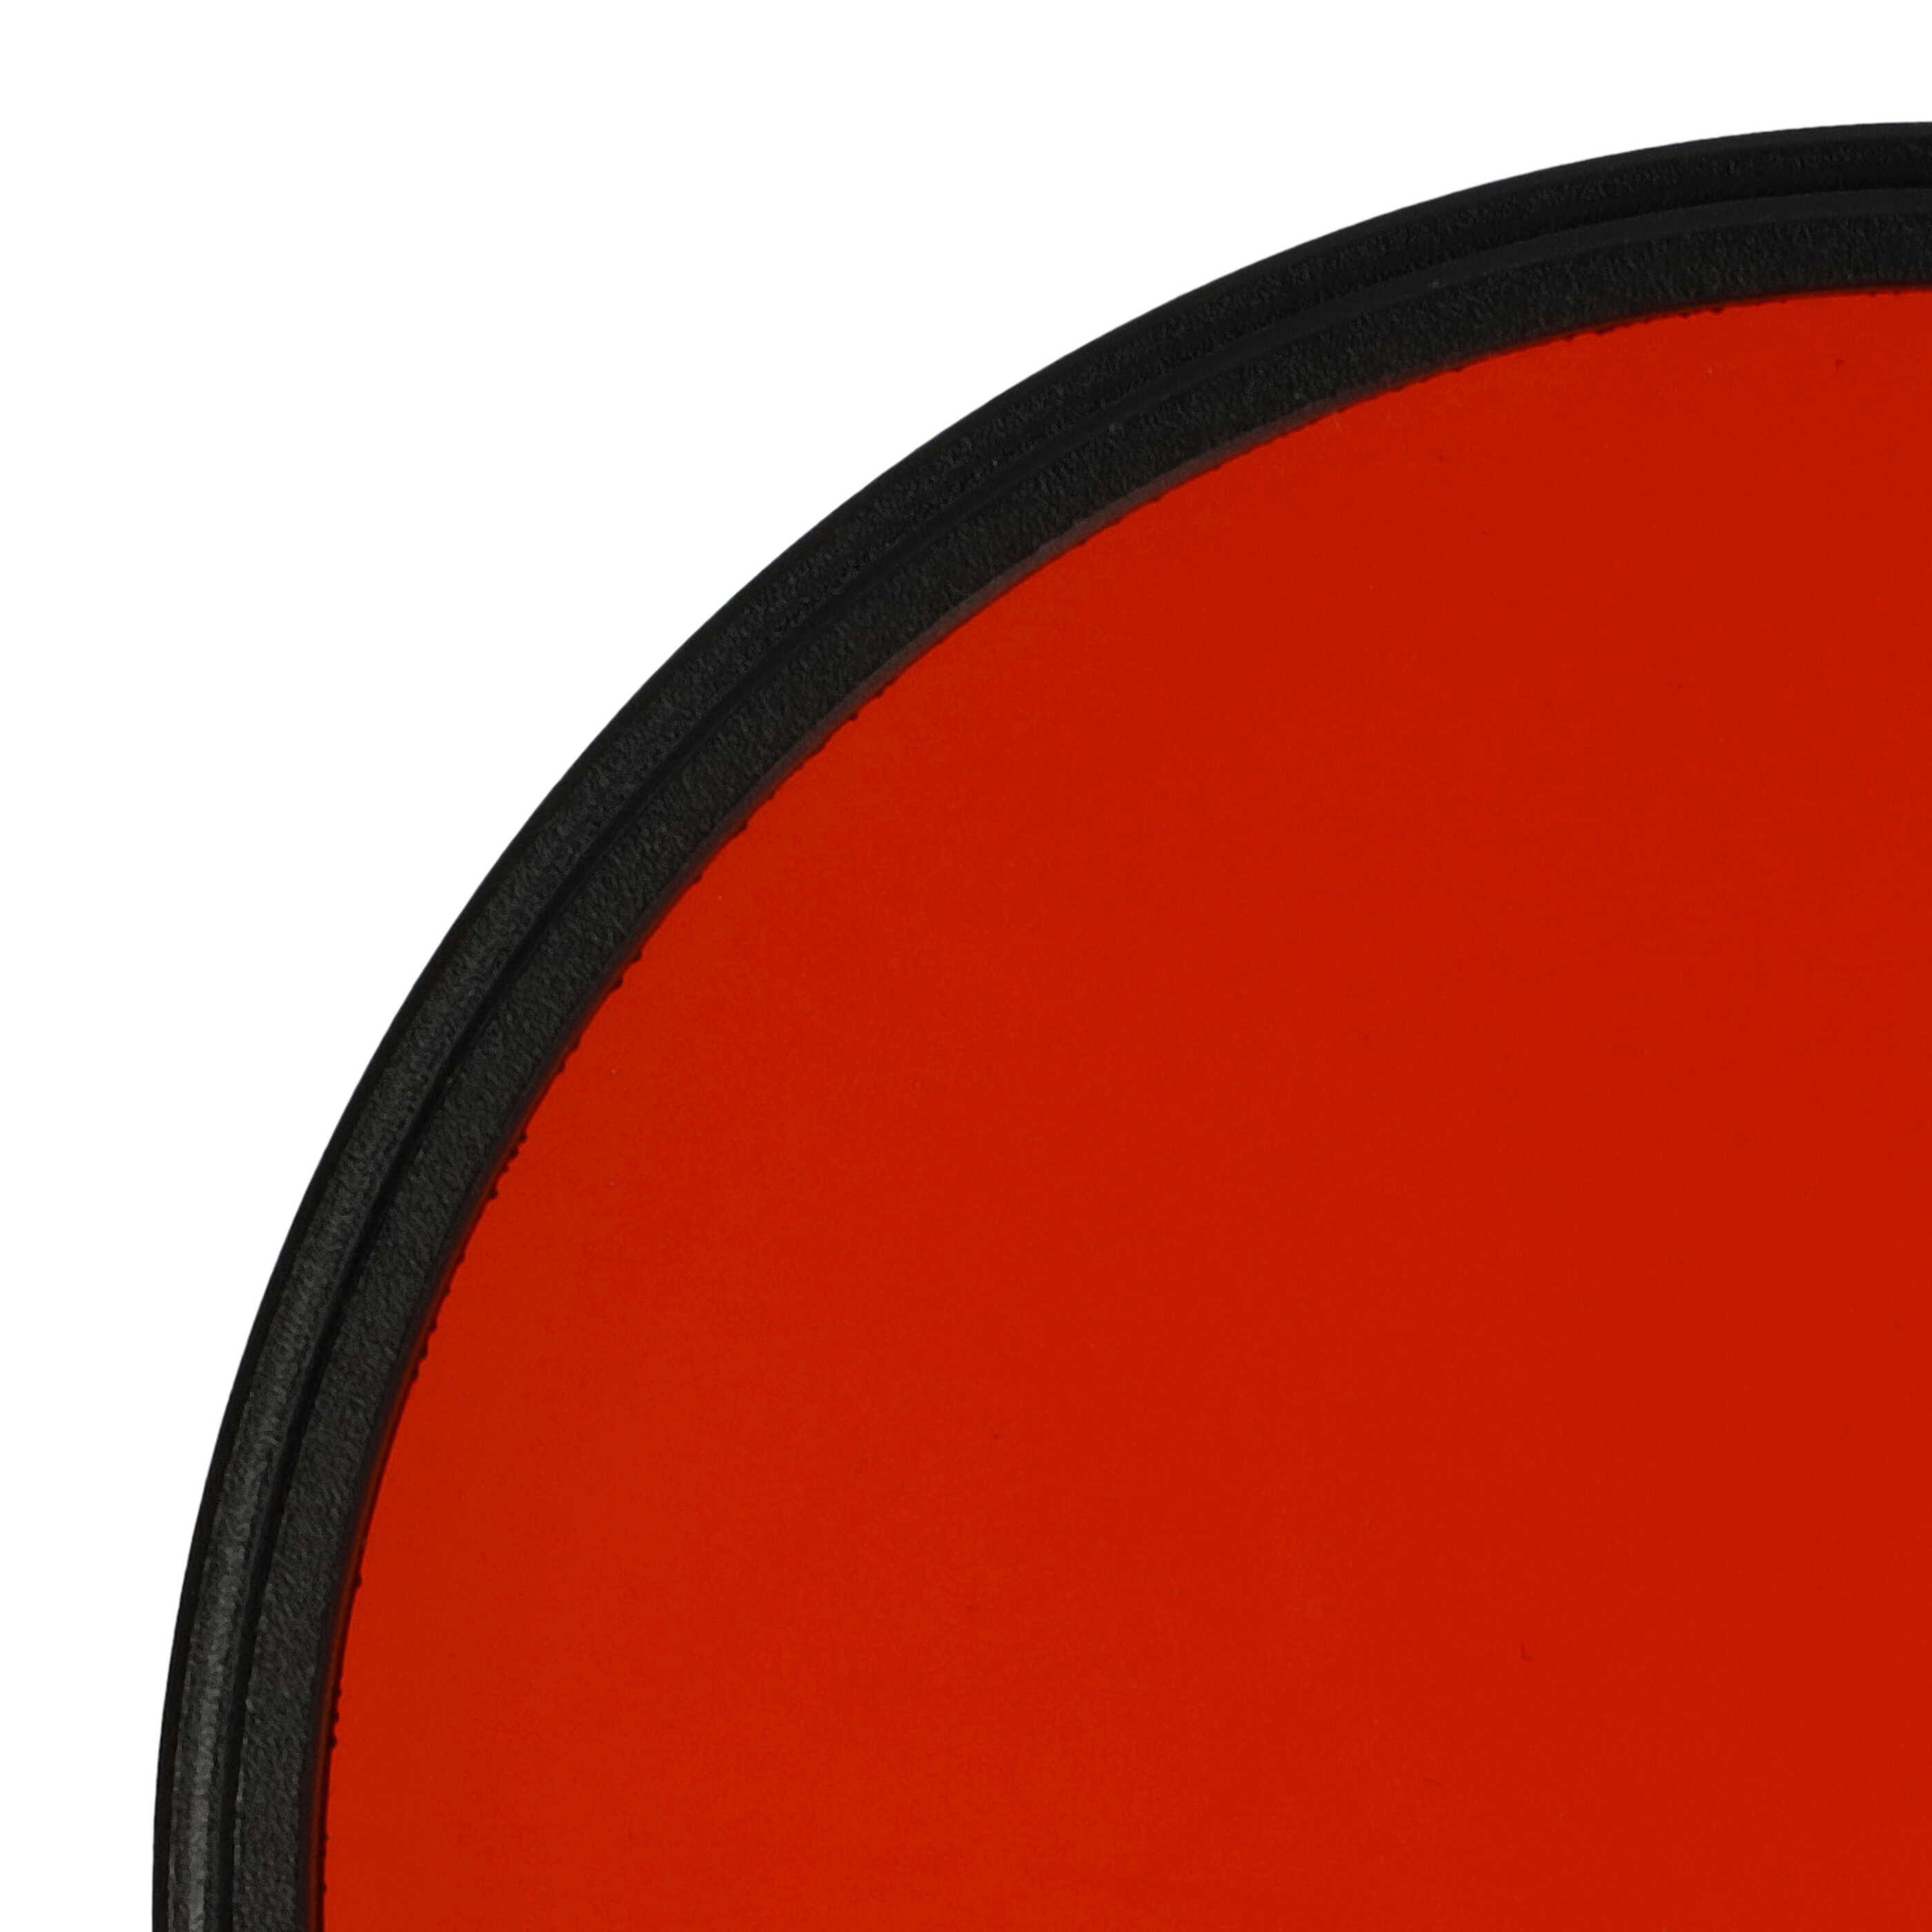 Coloured Filter, Orange suitable for Camera Lenses with 72 mm Filter Thread - Orange Filter